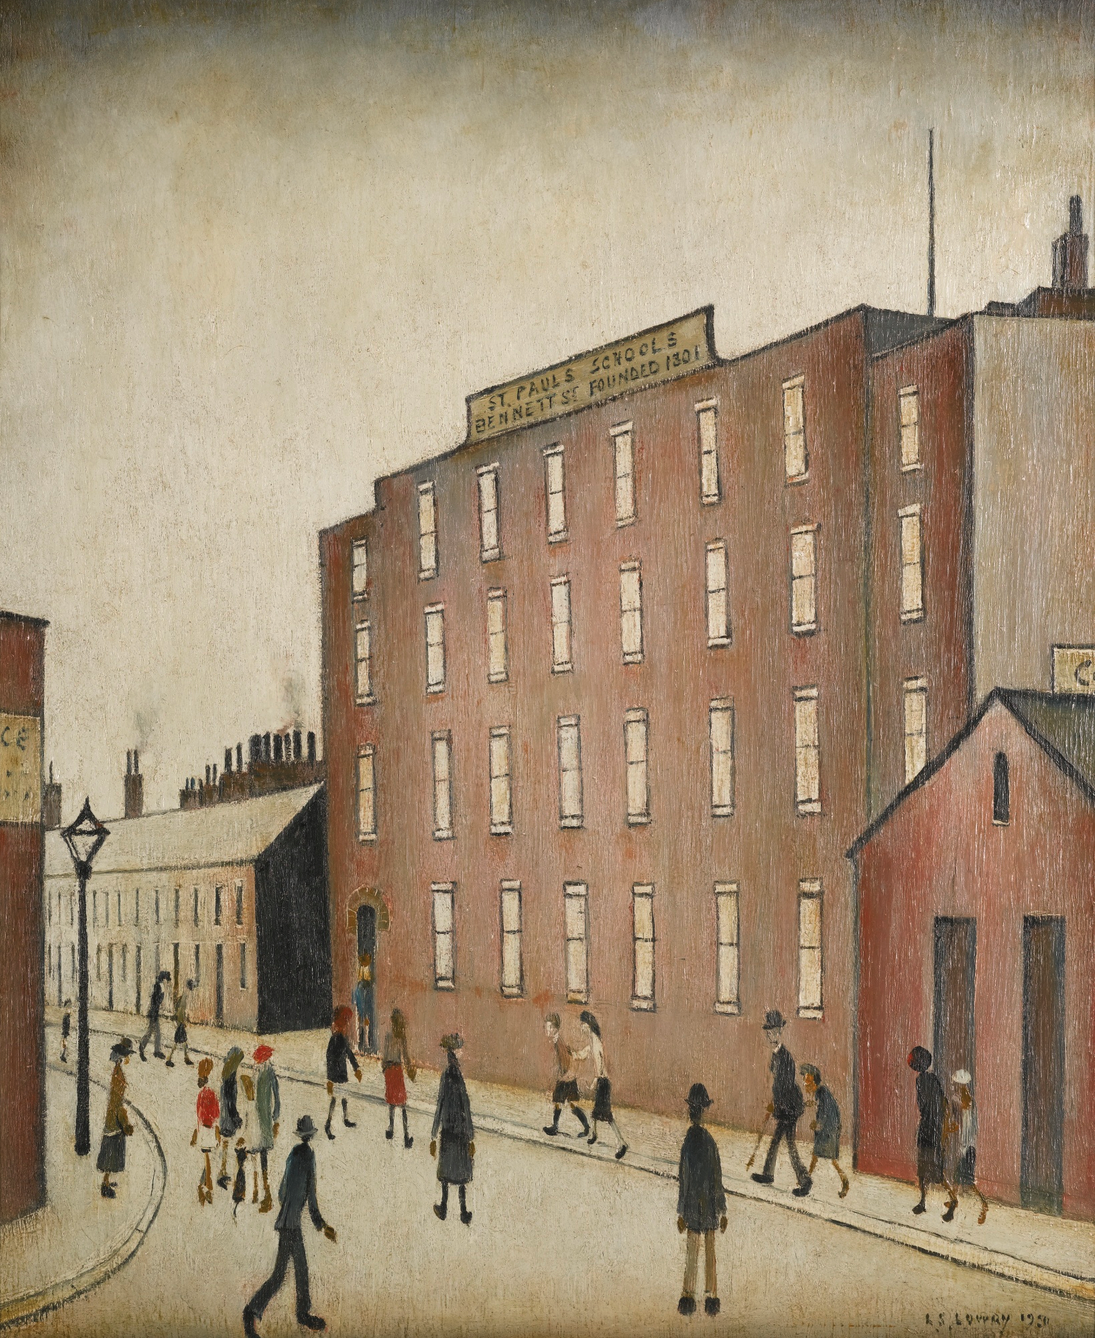 St Paul's School, Bennett Street (1950) by Laurence Stephen Lowry (1887 - 1976), English artist.